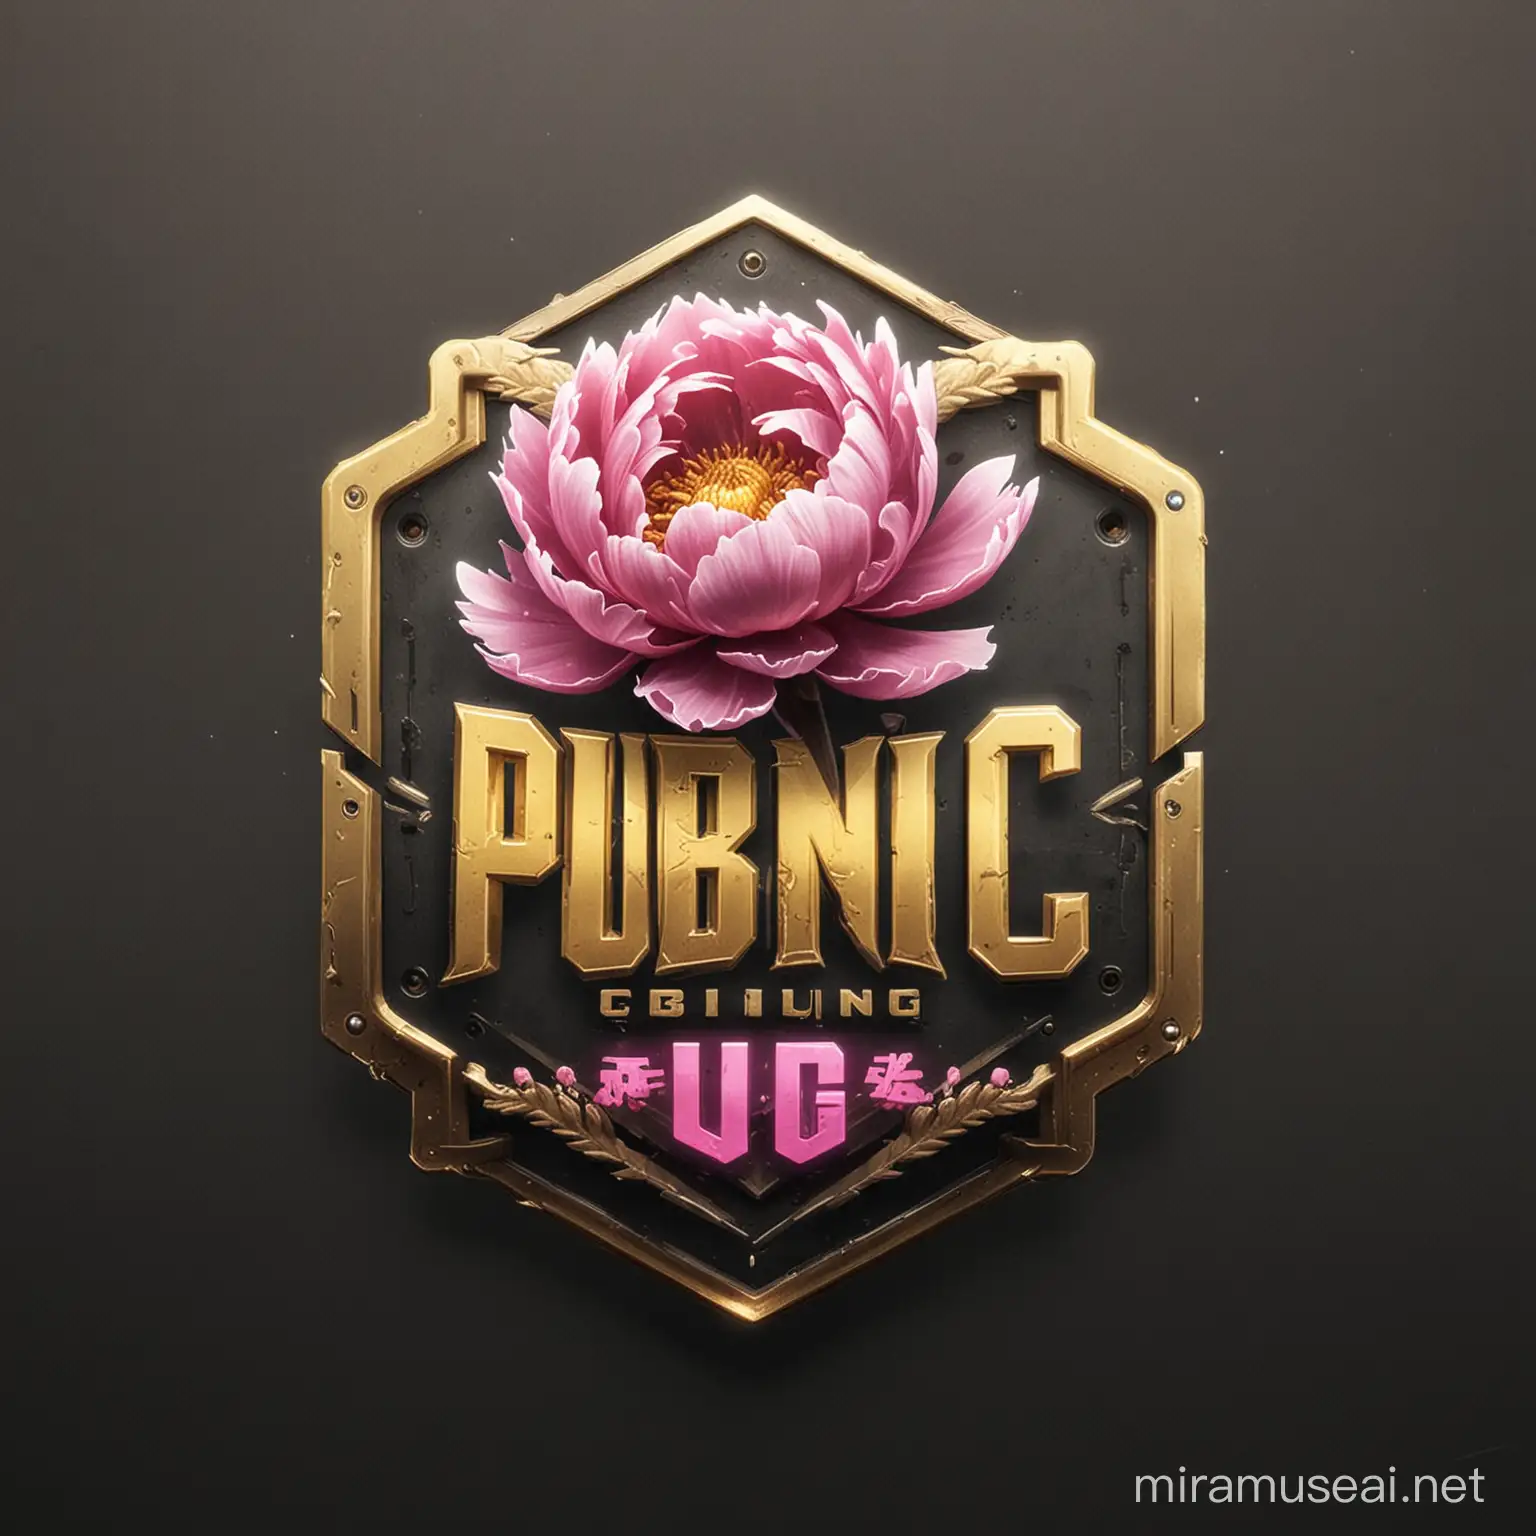 UC PUBG with peonie logo
